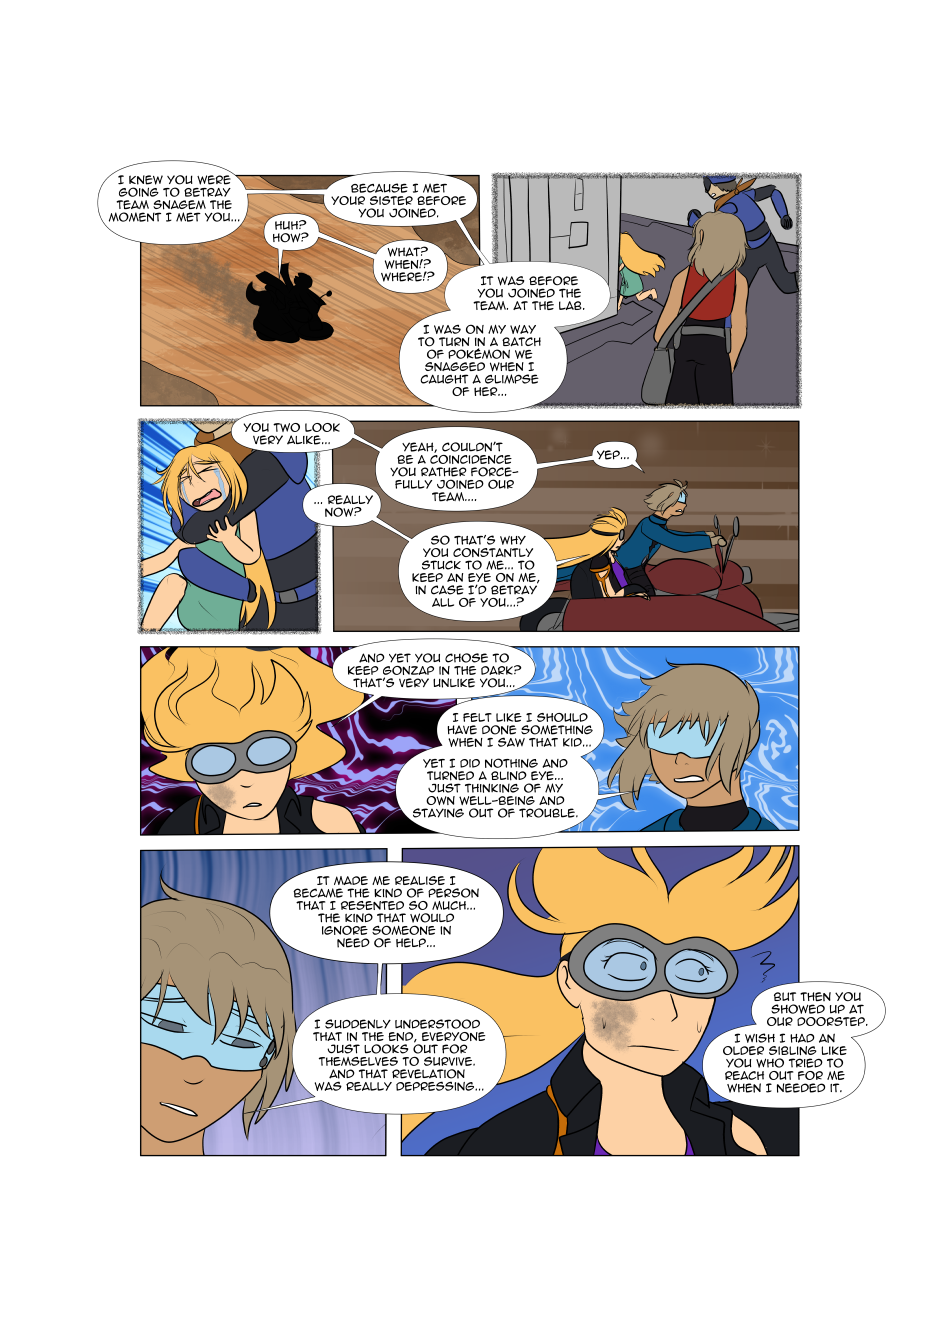 Wanted! - a Pokemon Colosseum Nuzlocke - Page 178